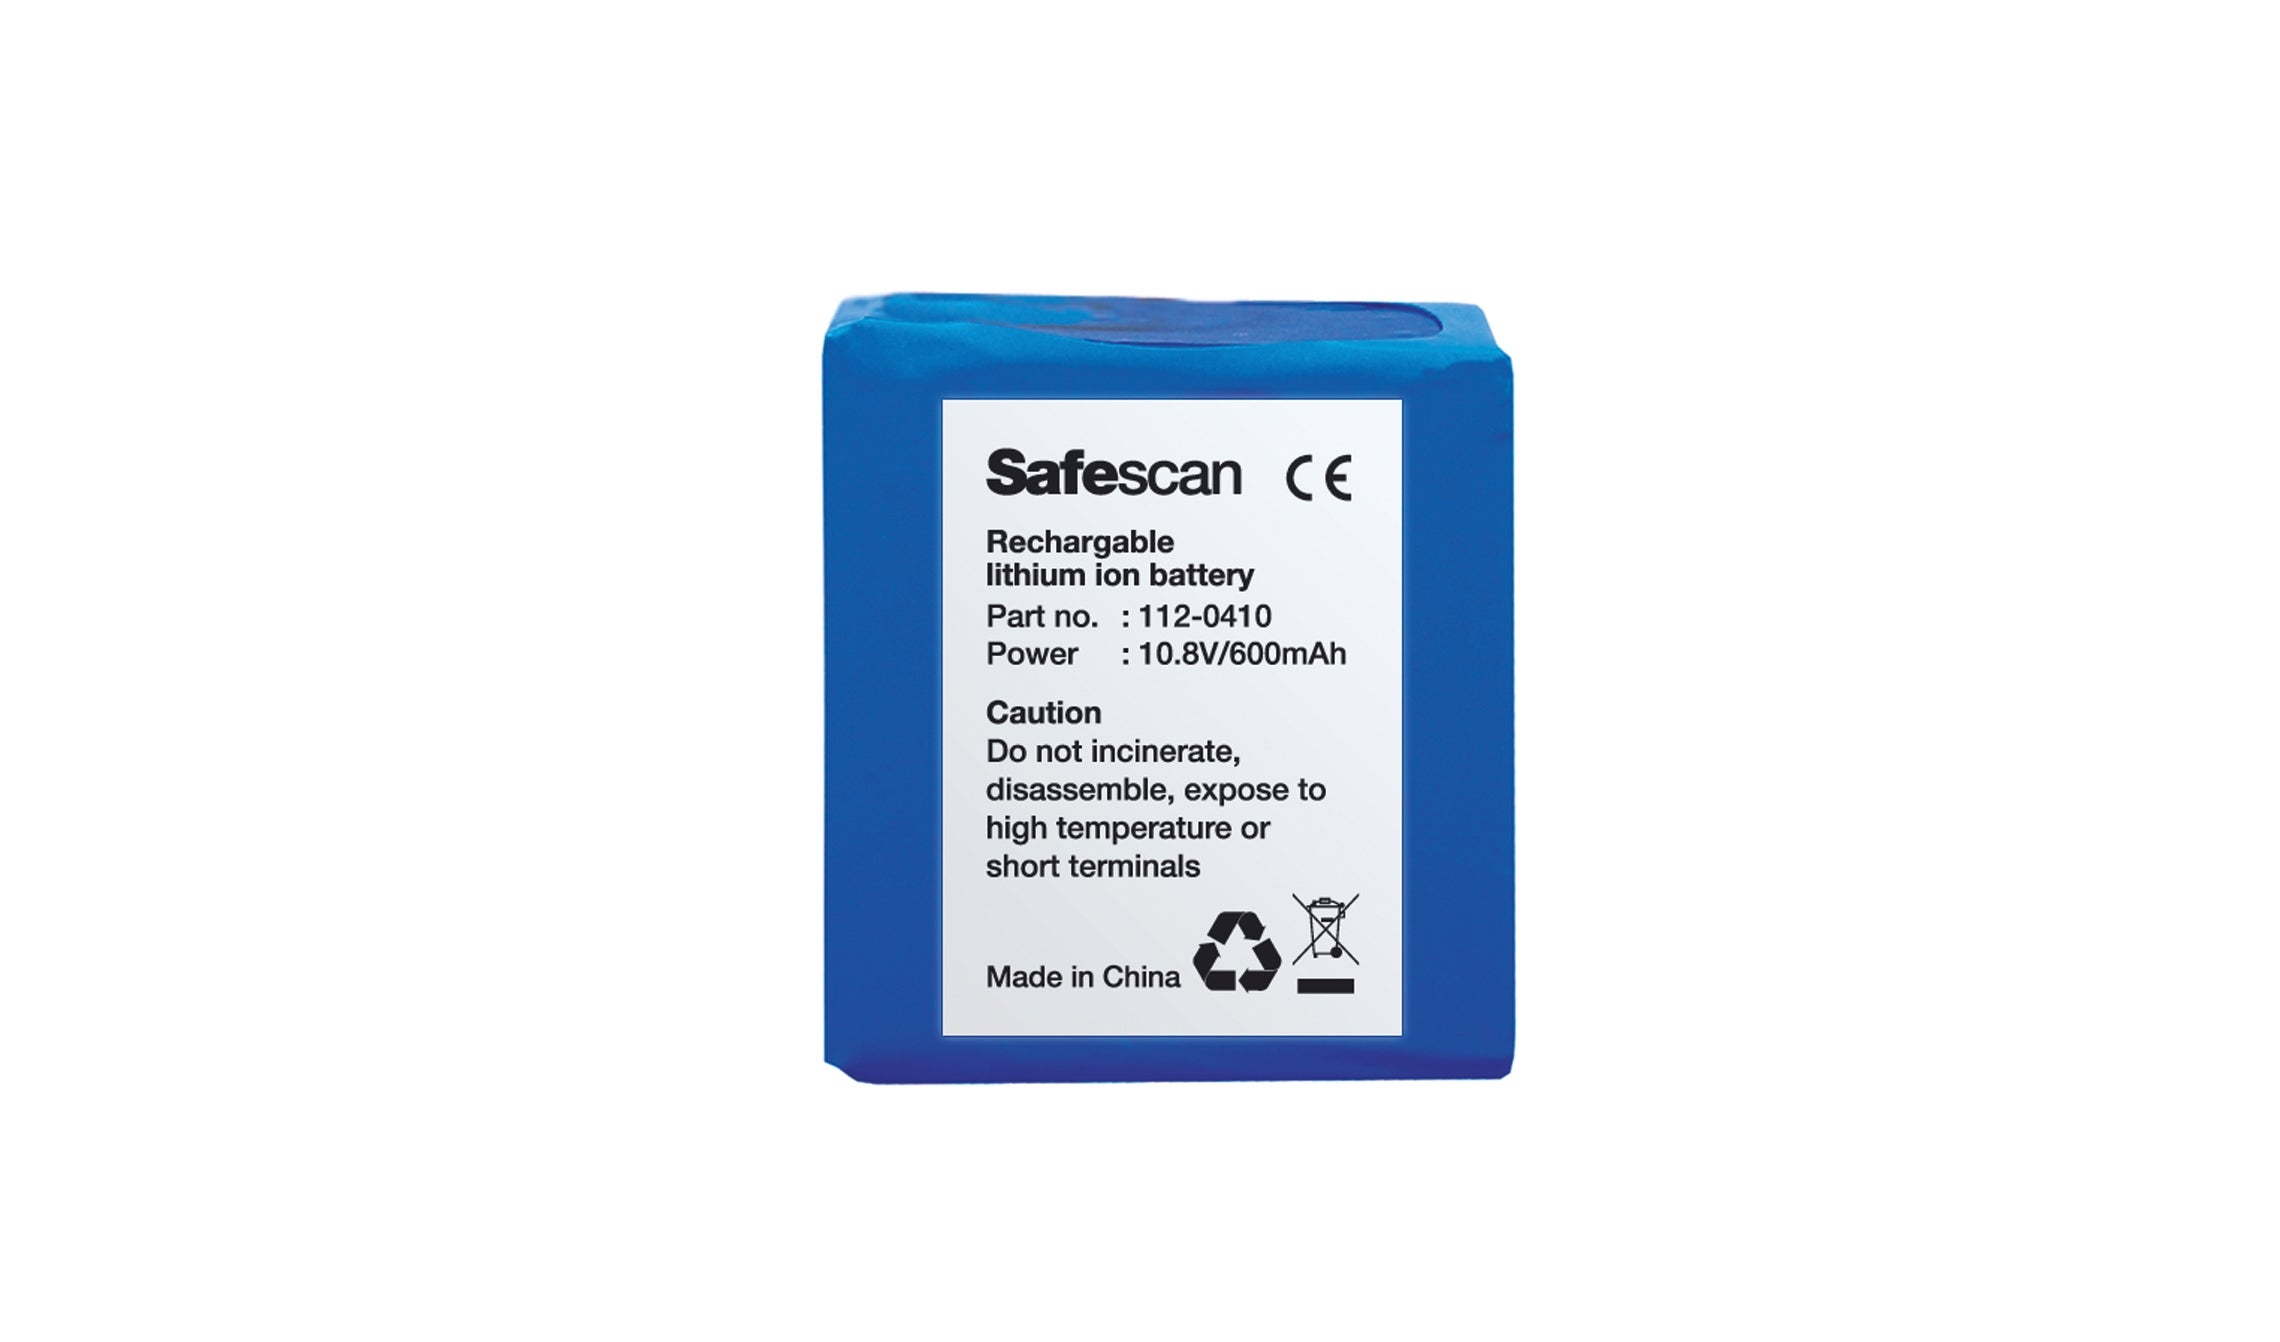 safescan-lb-105-battery